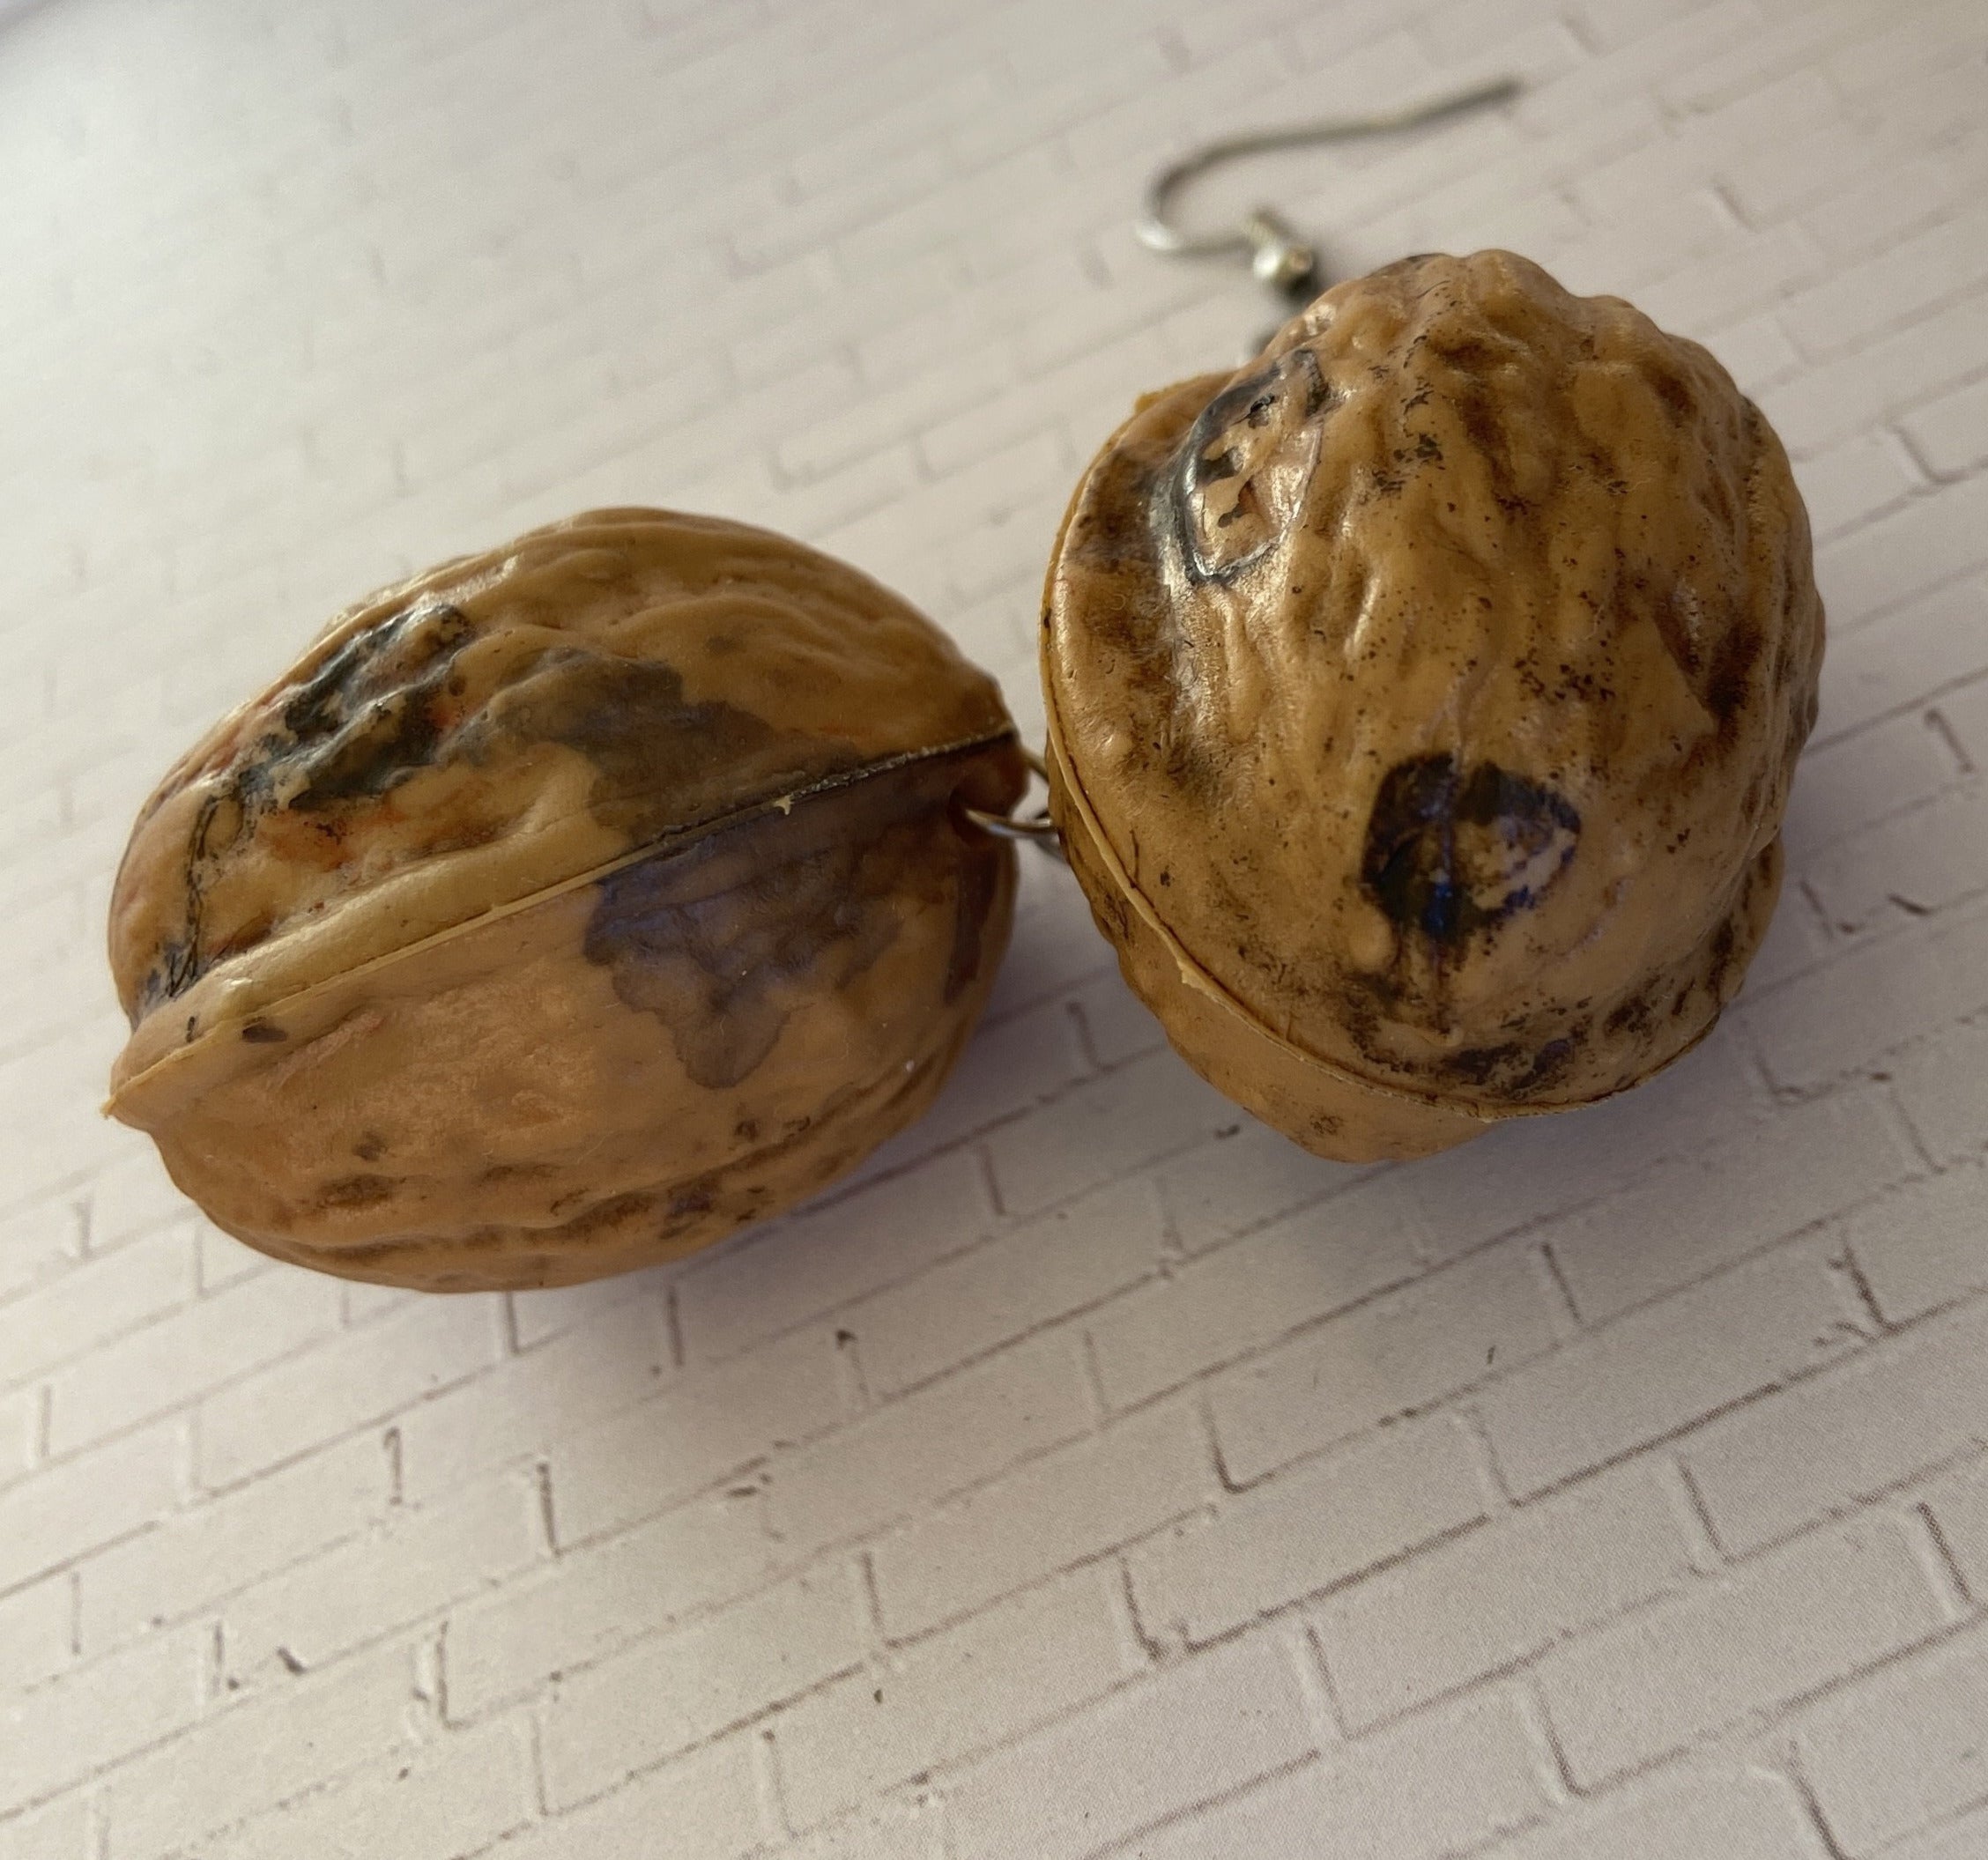 A pair of vintage plastic walnuts.